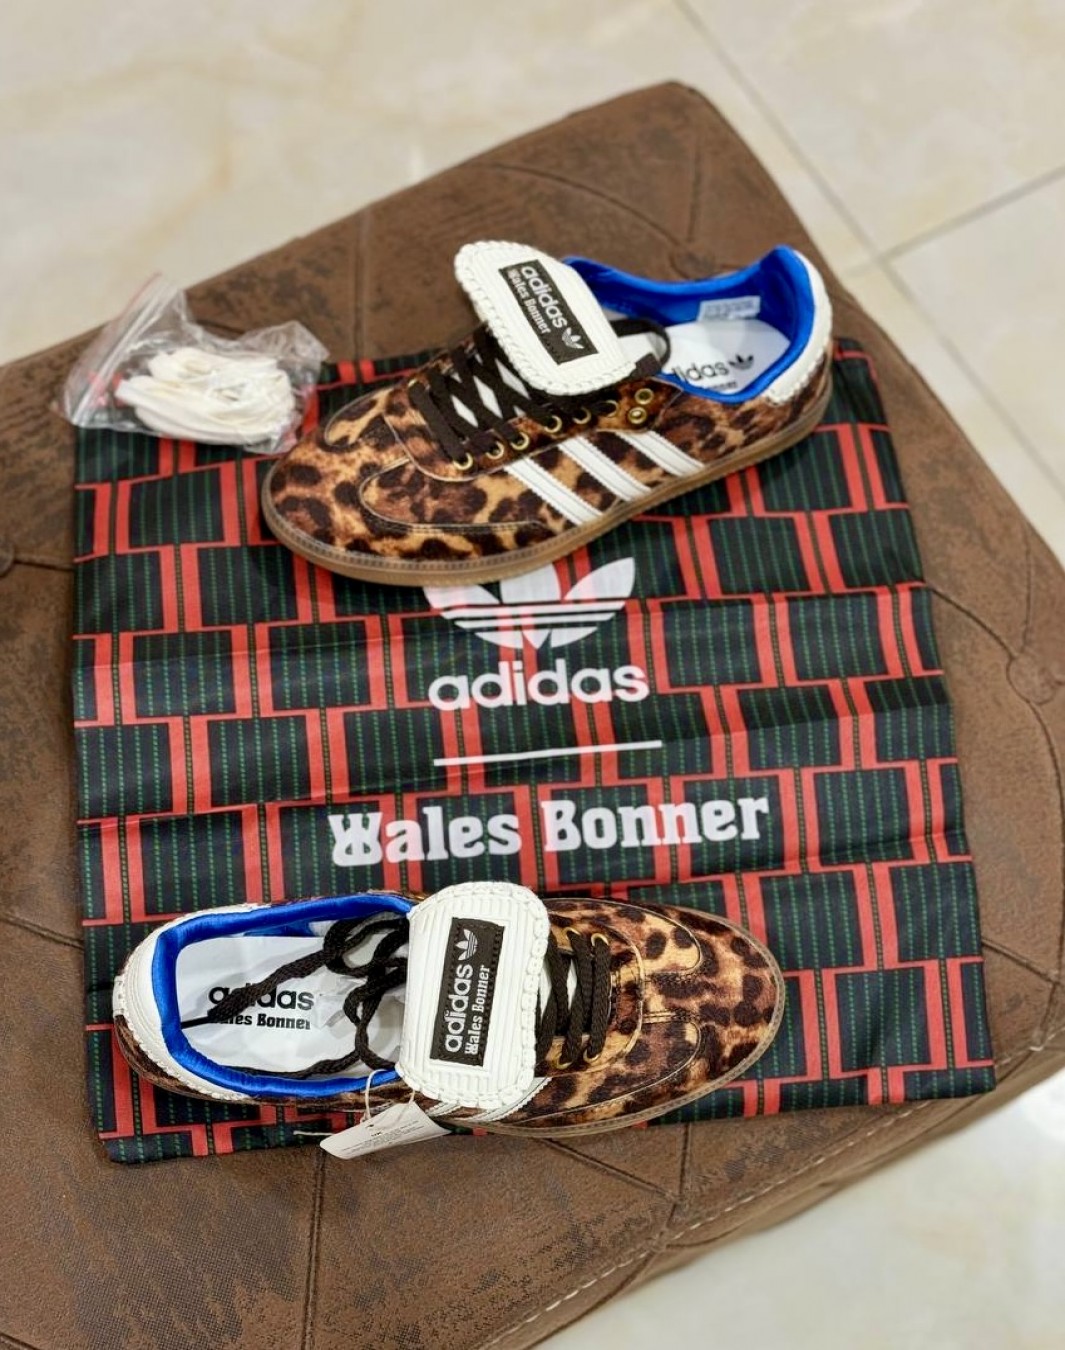 آدیداس سامبا ویلز بونر پلنگی ||  Adidas Samba Wales Bonner Leopard (کد ۴۳۱)